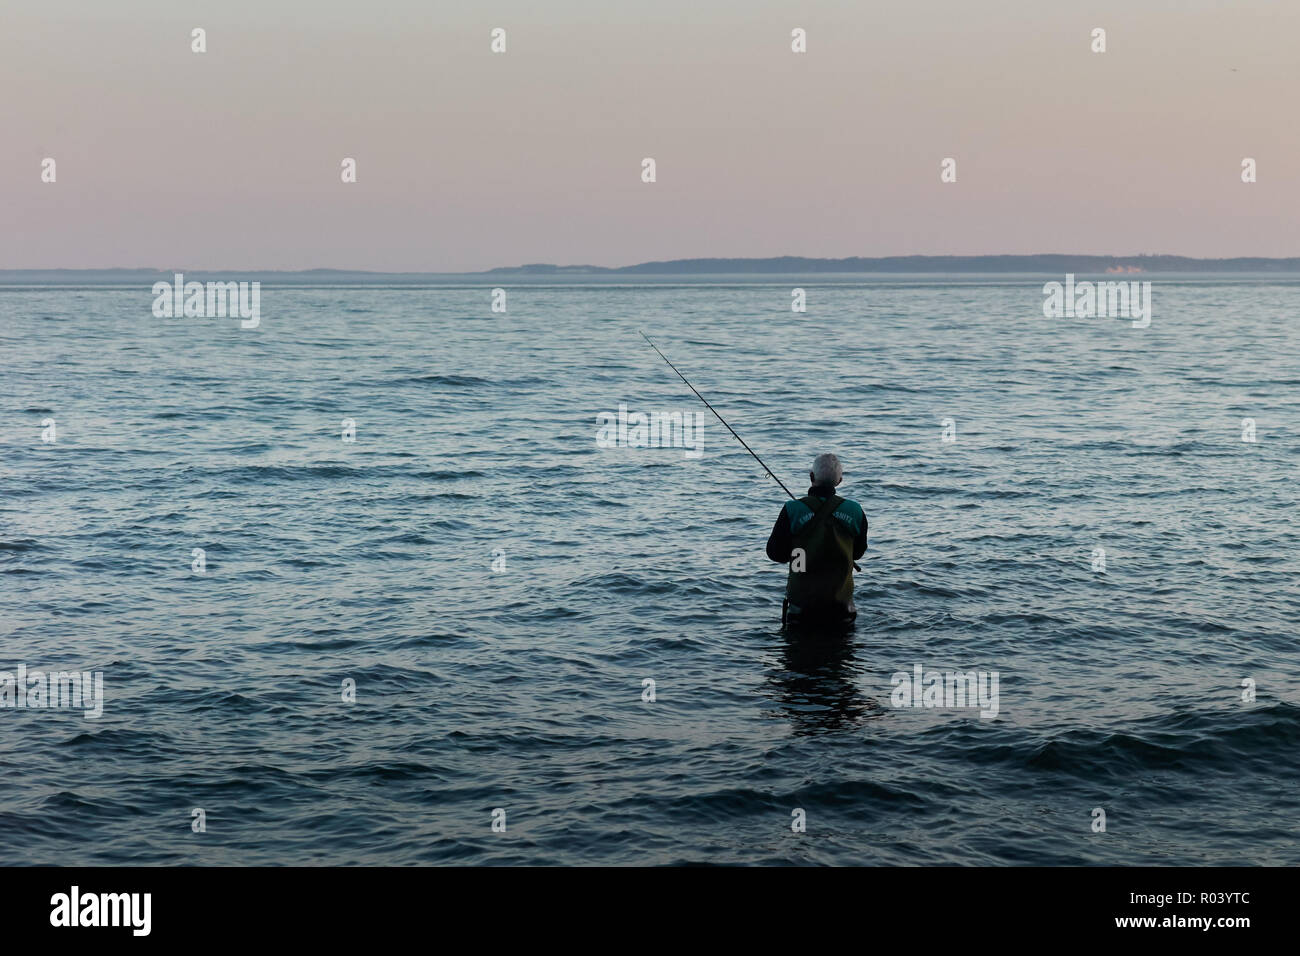 Baltic island Ruegen, Mecklenburg-Western Pomerania, Germany - Angler fishing in the water Stock Photo